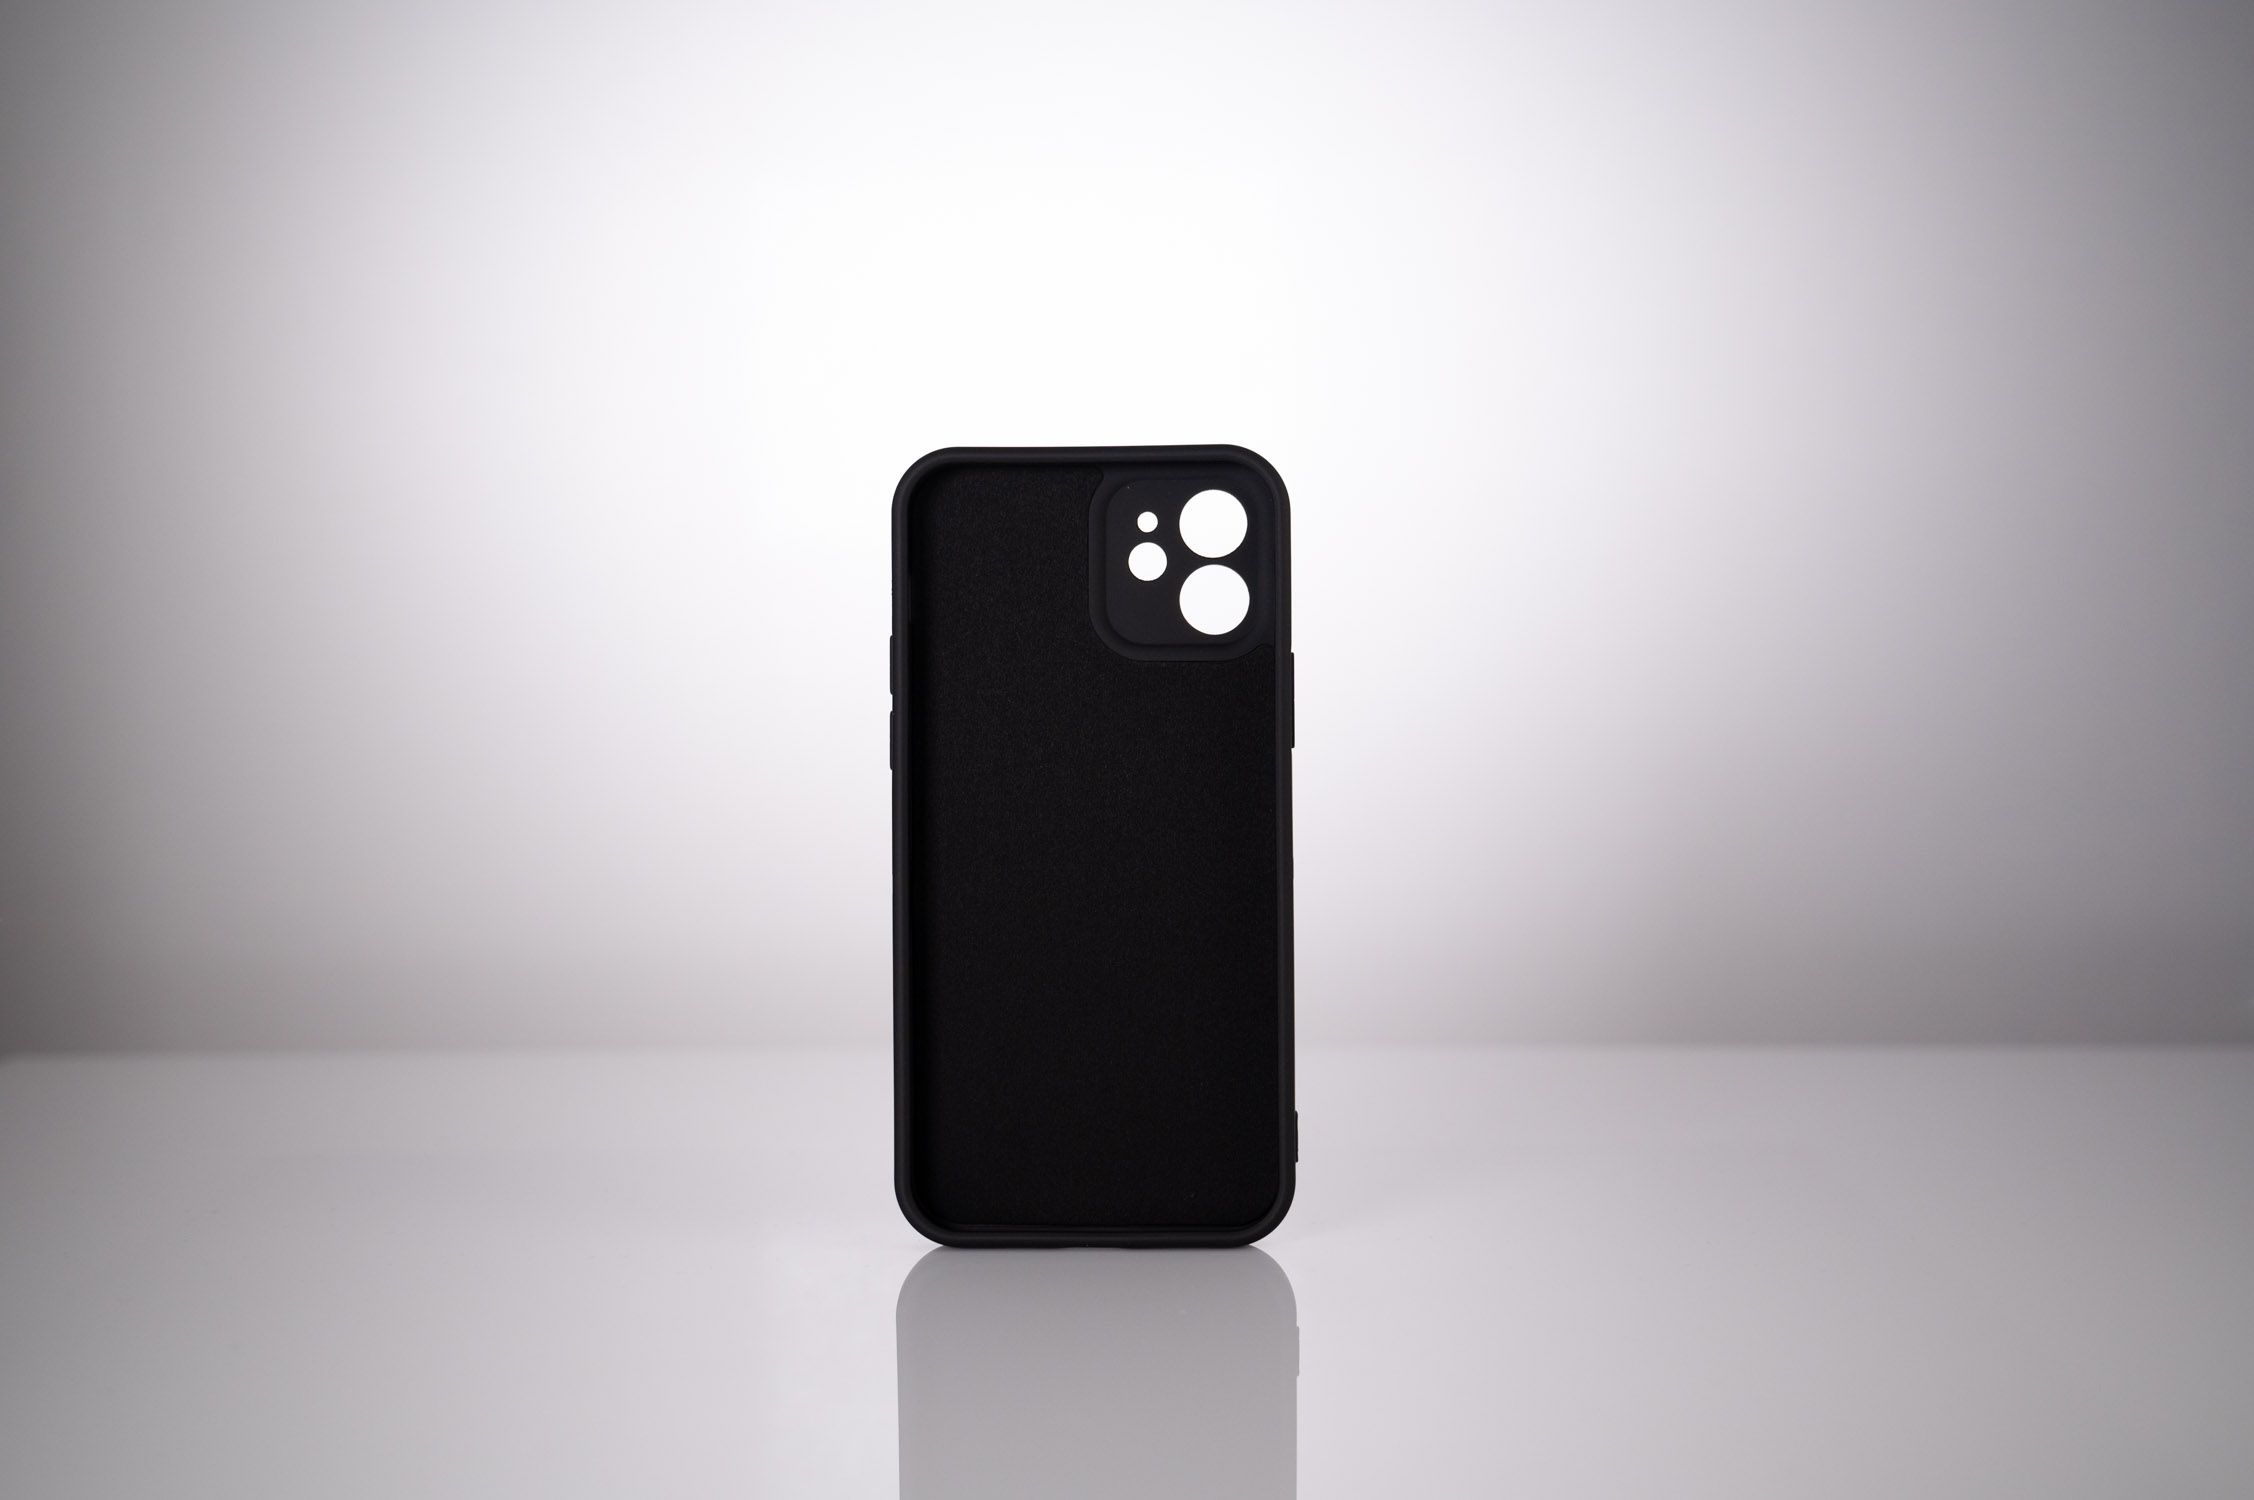 HUSA SMARTPHONE Spacer pentru Iphone 13 Pro Max, grosime 1.5mm, protectie suplimentara antisoc la colturi, material flexibil TPU, transparenta 